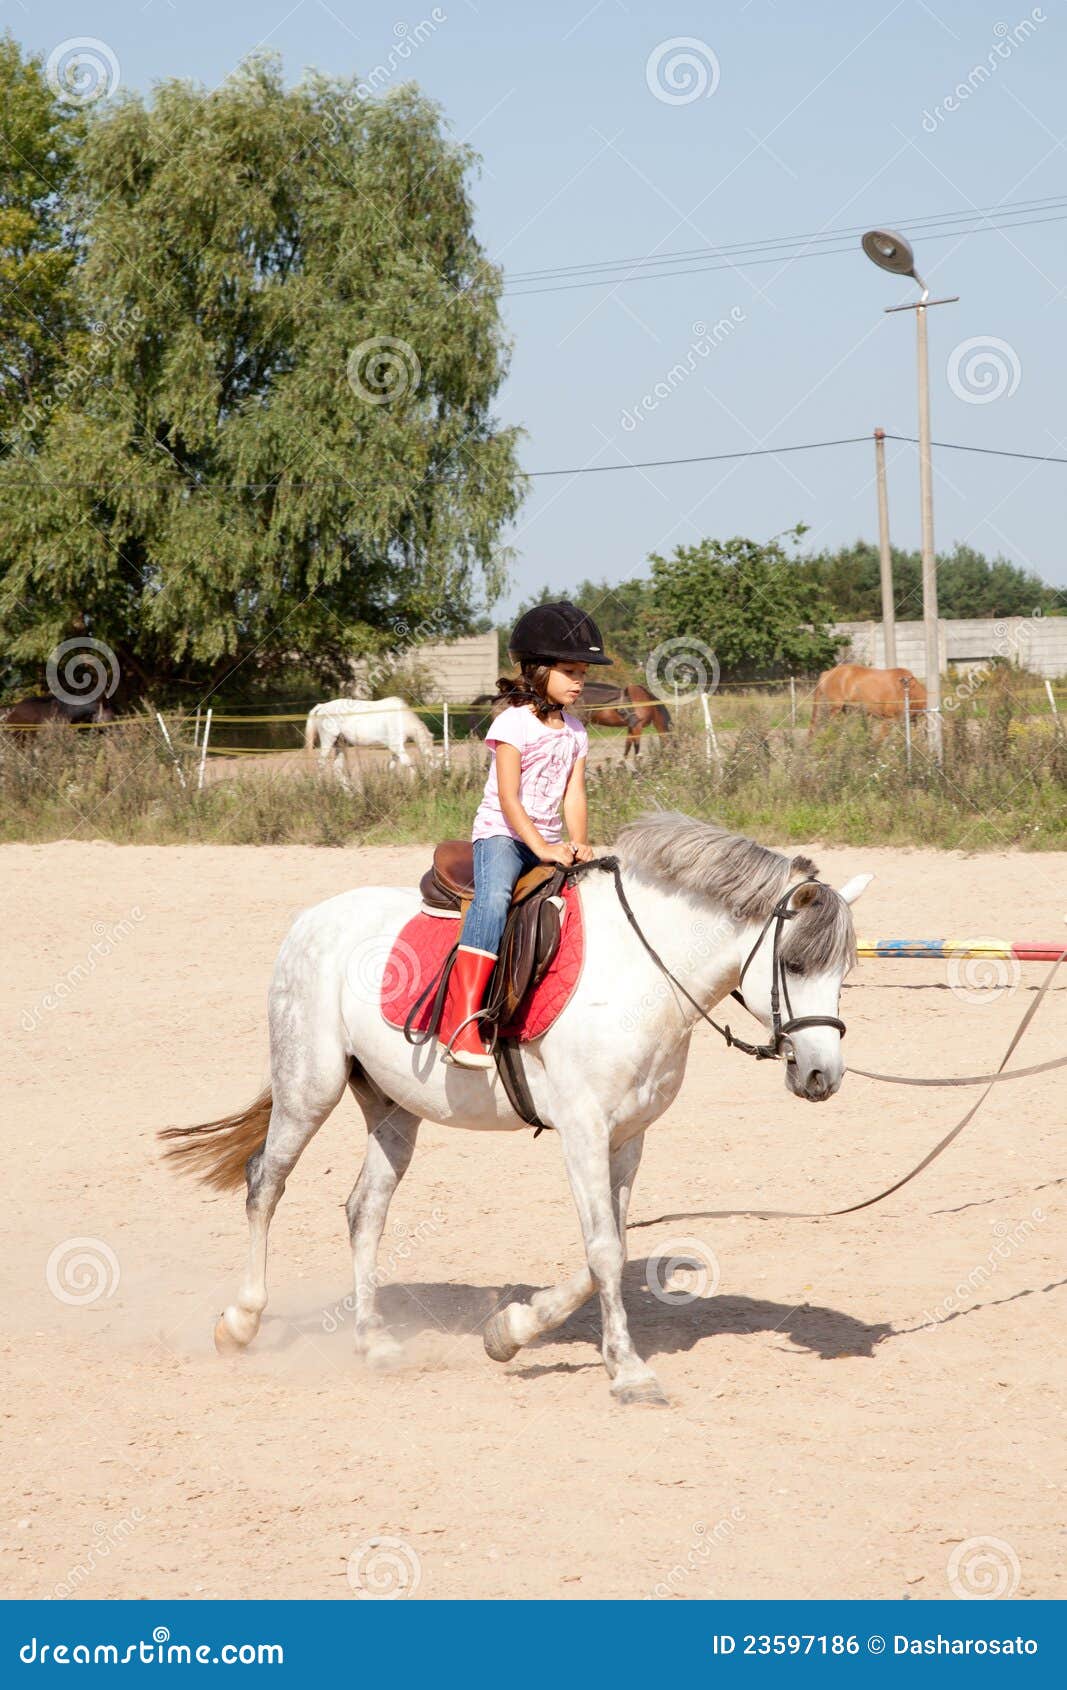 Little Girl Taking Horseback Riding Lessons Royalty Free Stock Image ...